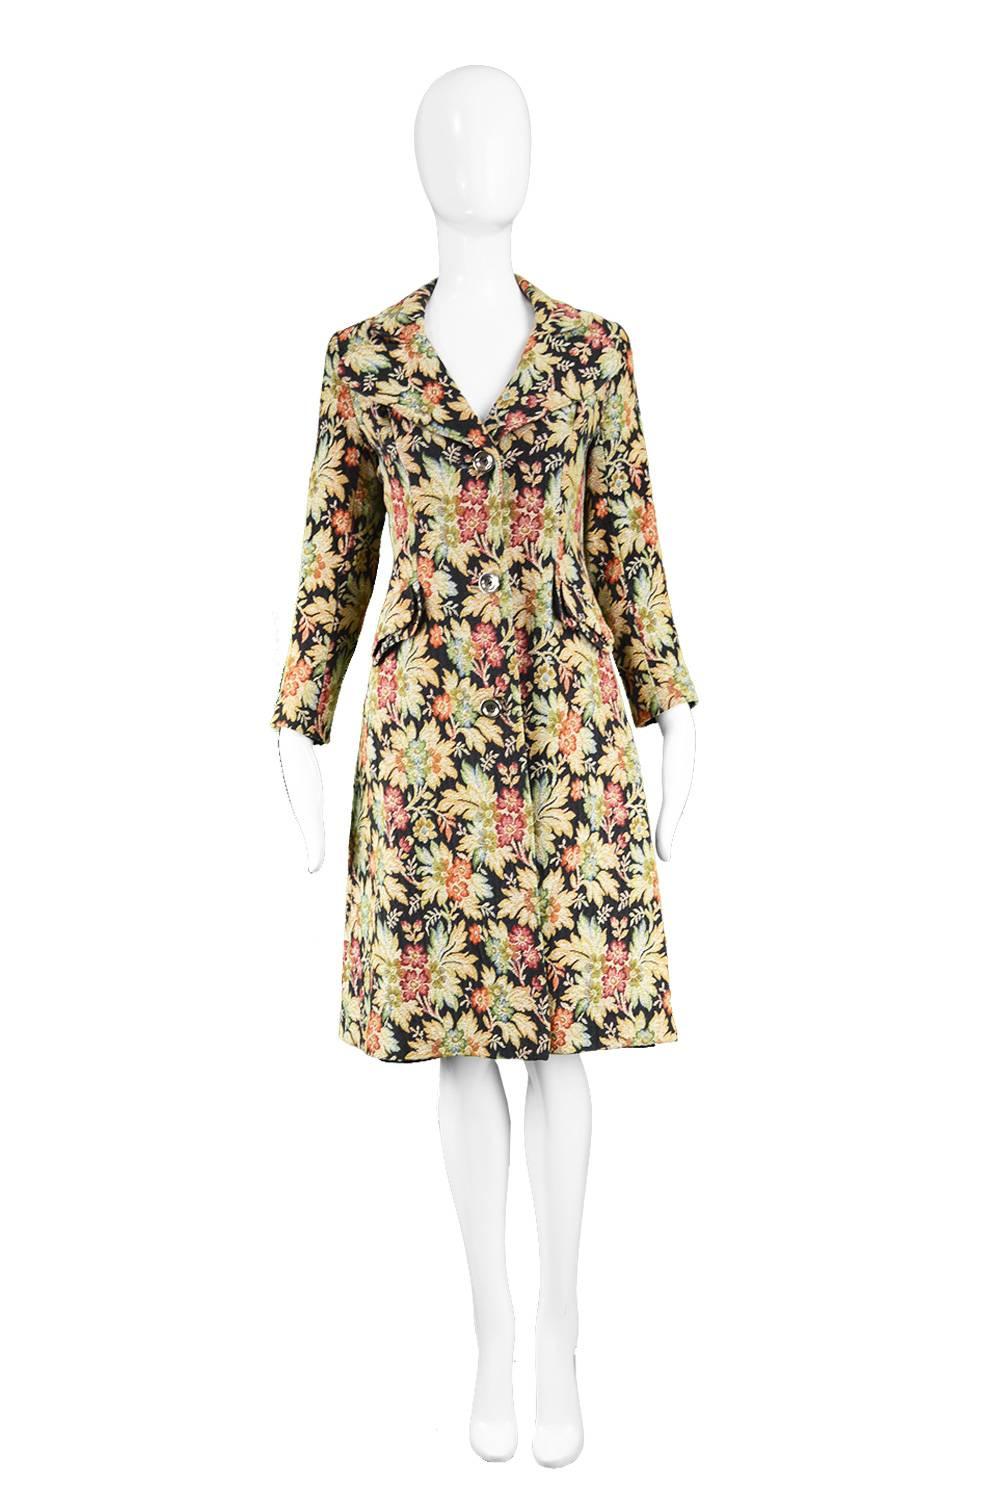 Vintage Miss Selfridge Bohemian Cotton Floral Tapestry Style Coat, 1970s

Estimated Size: UK 8/ US 4/ EU 36. Please check measurements
Bust - 34” / 86cm (allow a couple of inches room for movement)
Waist - 30” / 76cm
Hips - 36” / 91cm
Length